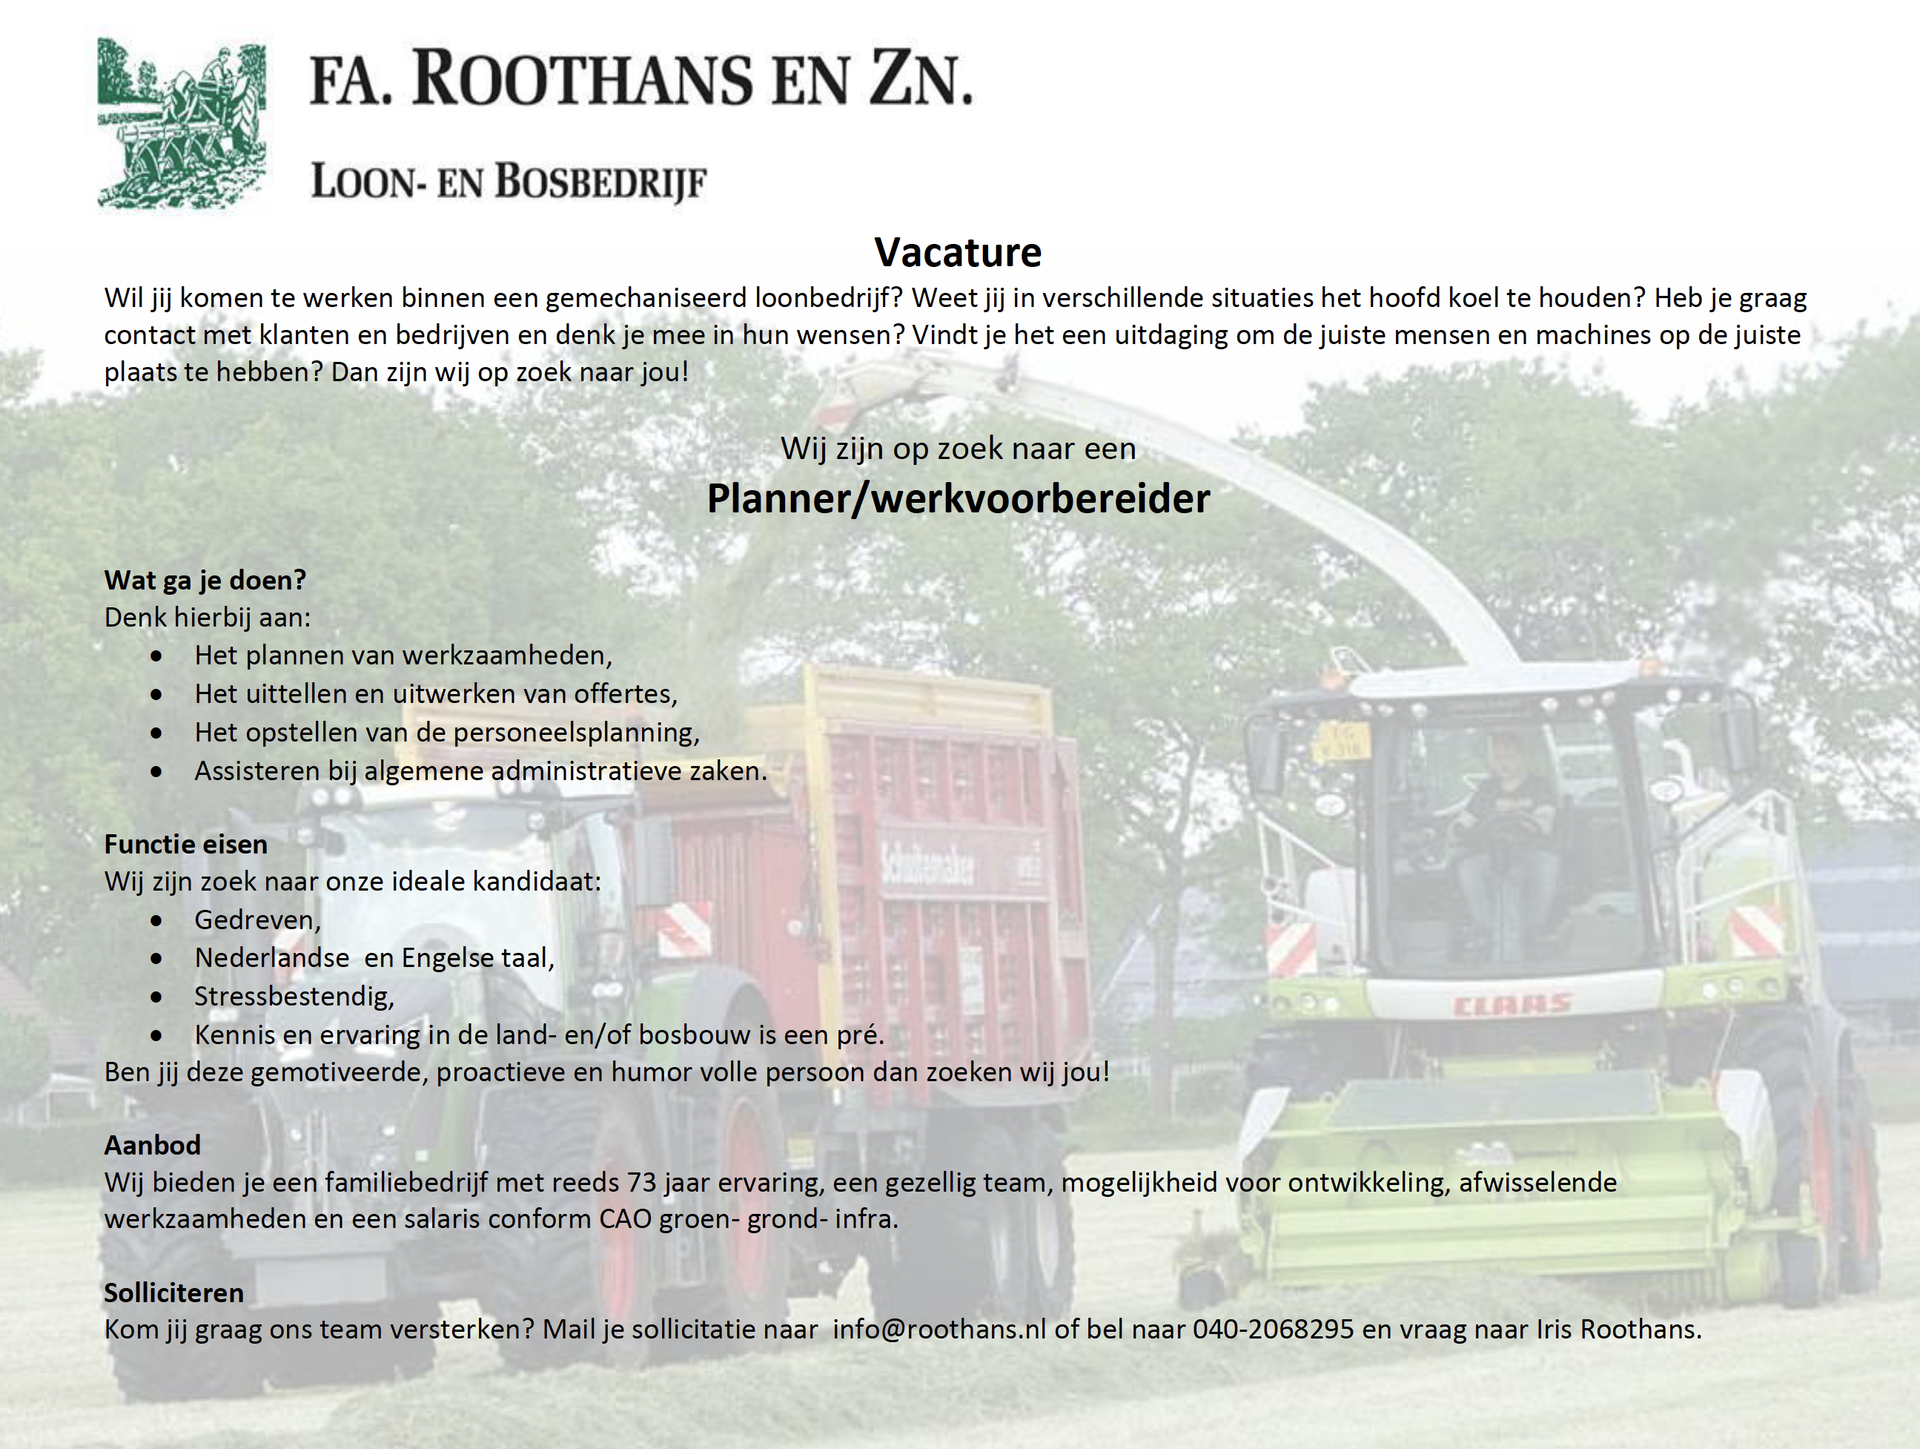 (c) Roothans.nl